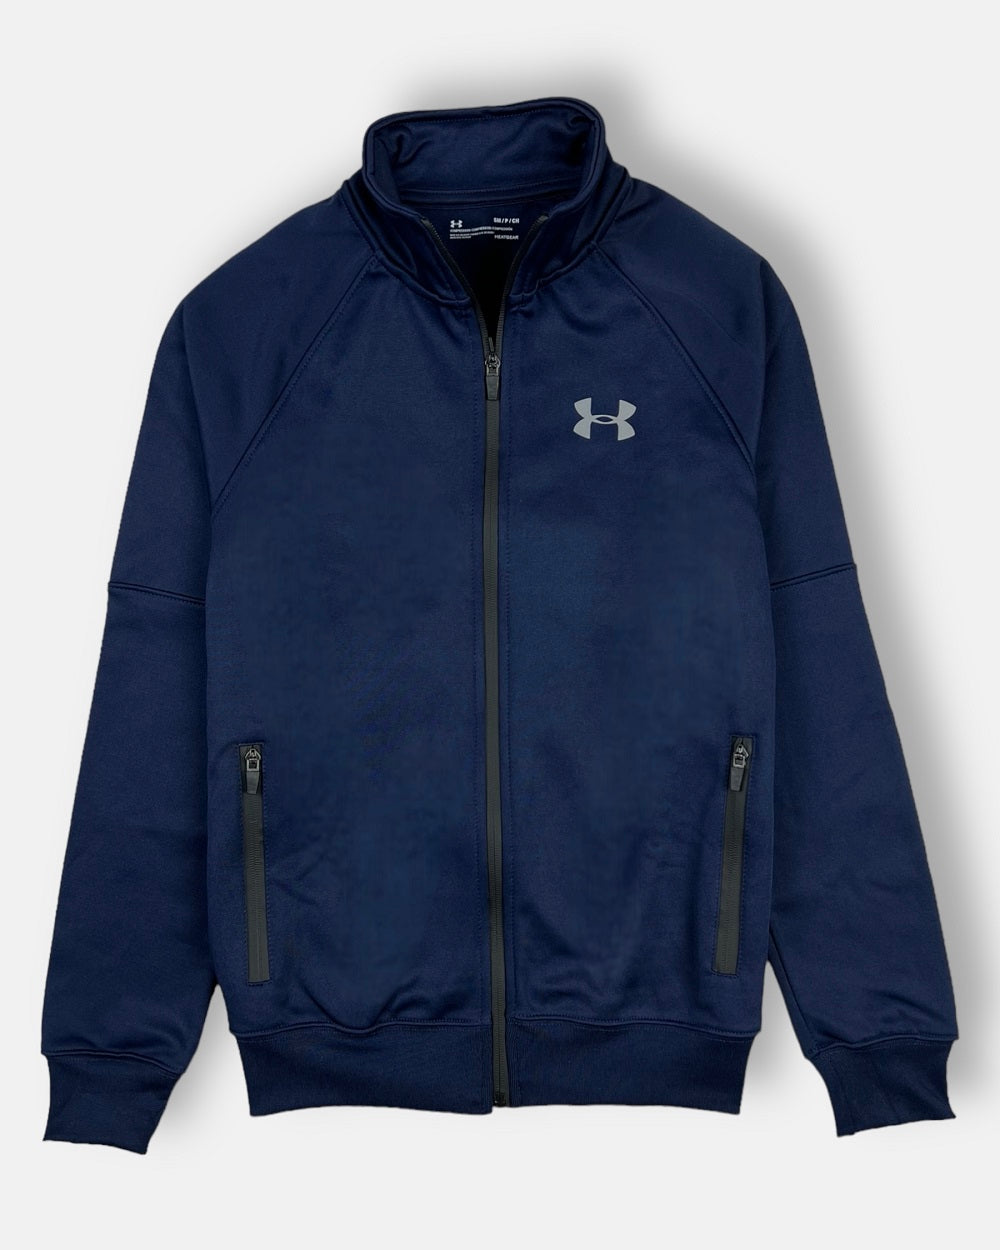 UA Imported polyester Fleece Tracksuit (Navy Blue)